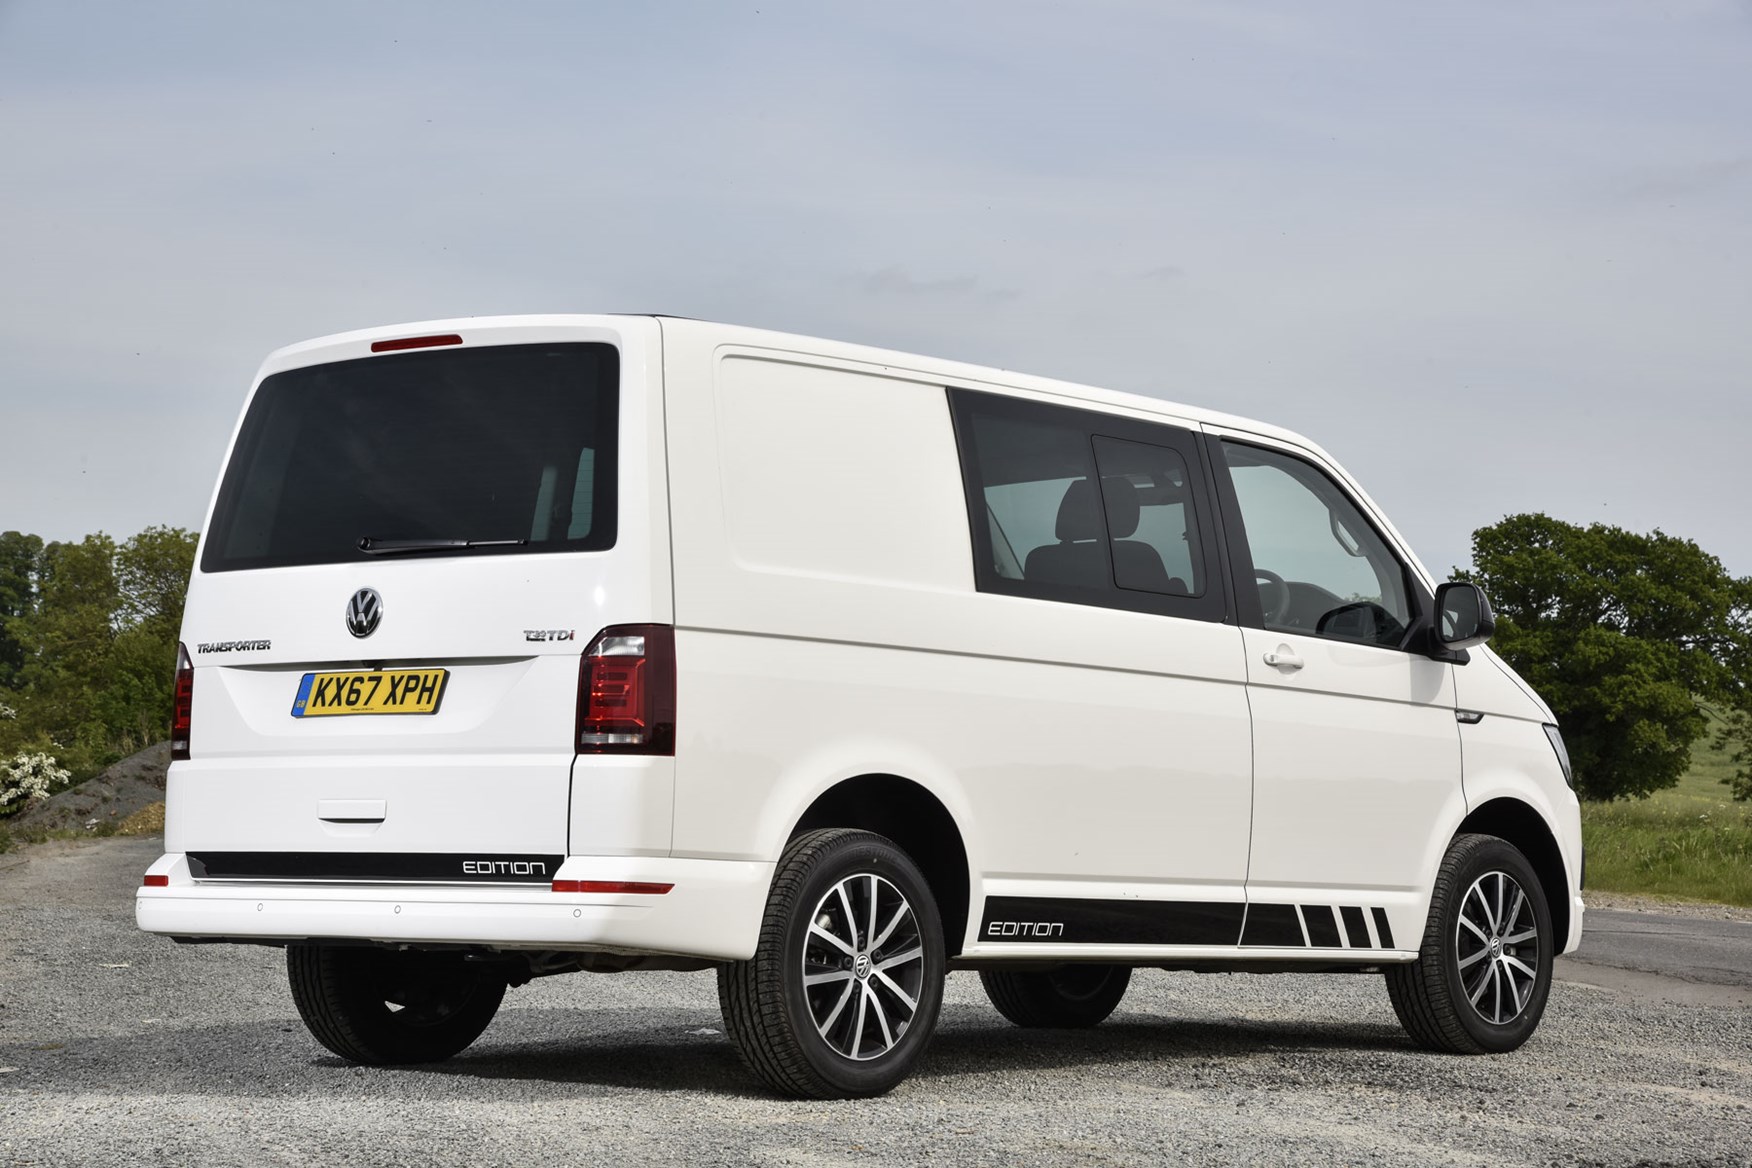 VW Transporter Edition kombi 150 TDI review Parkers